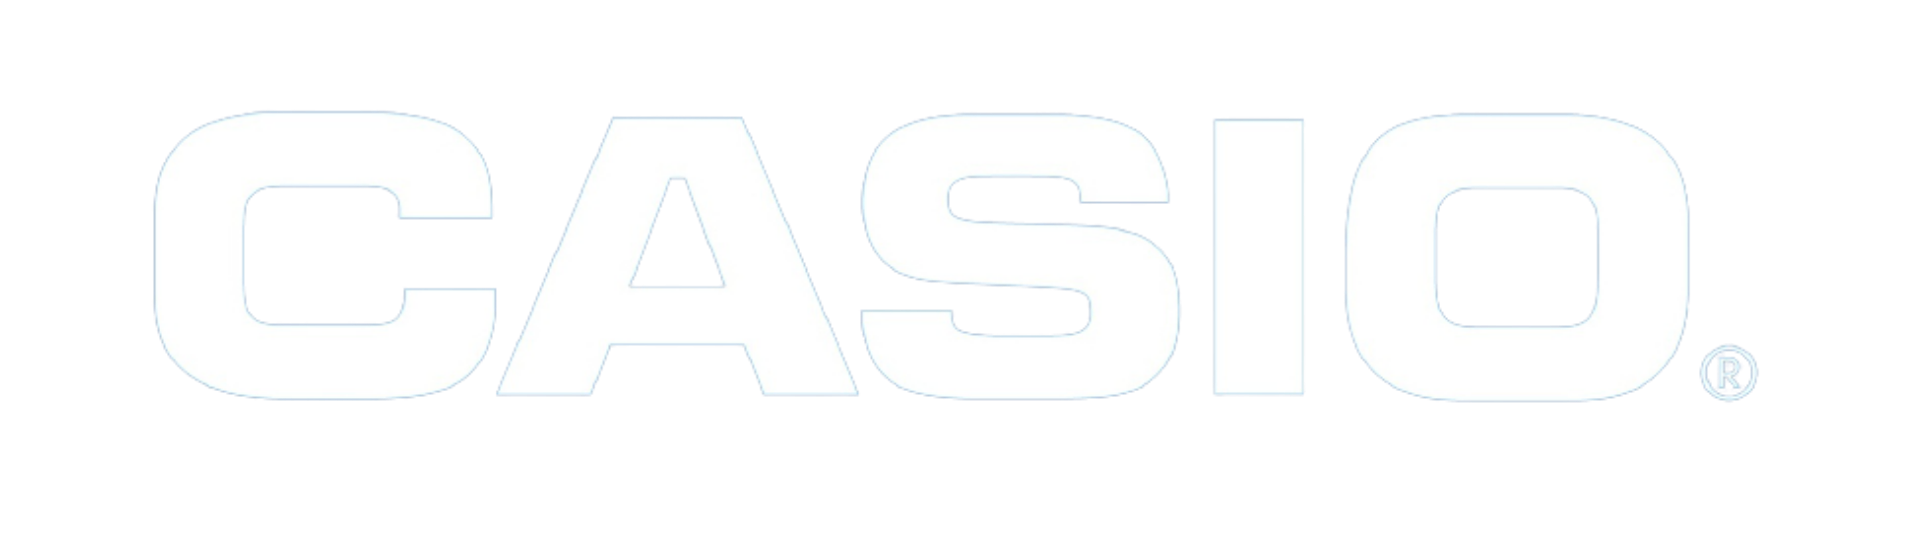 Casio Logo White